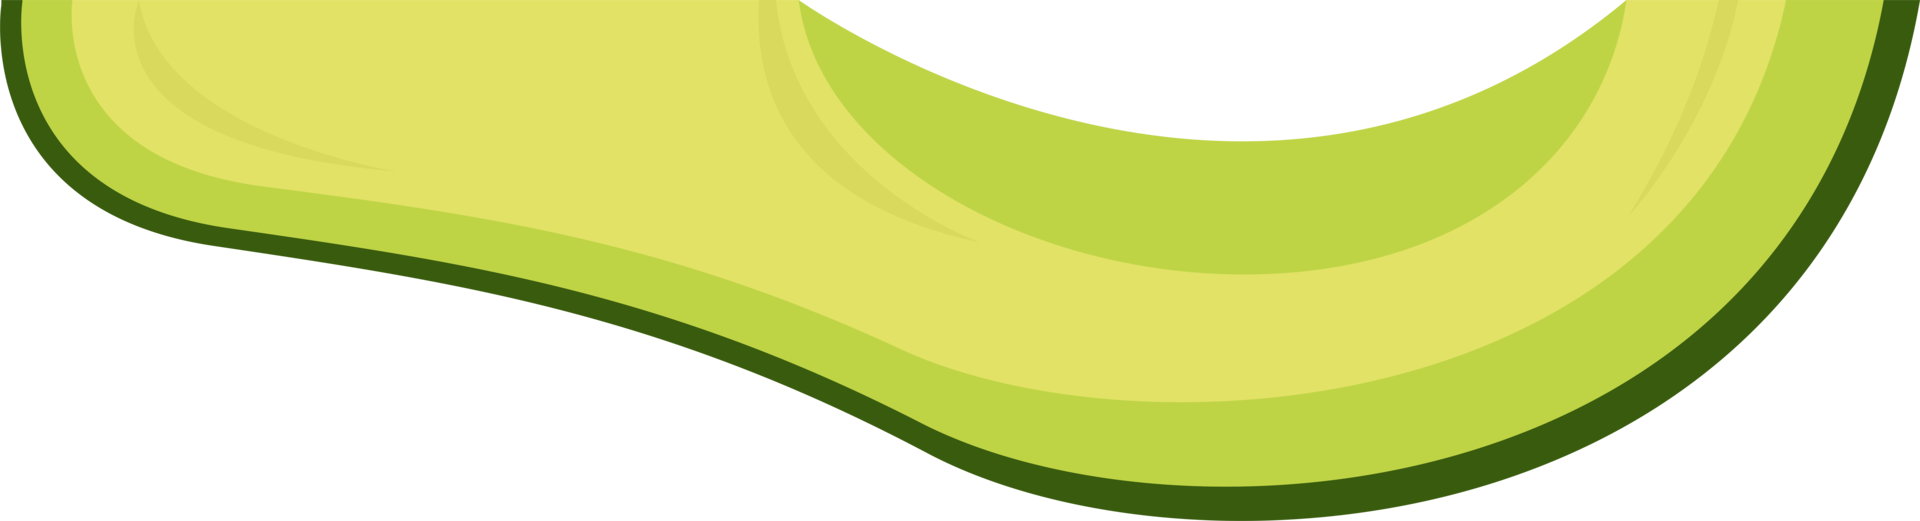 Fresh avocado clipart design illustration png